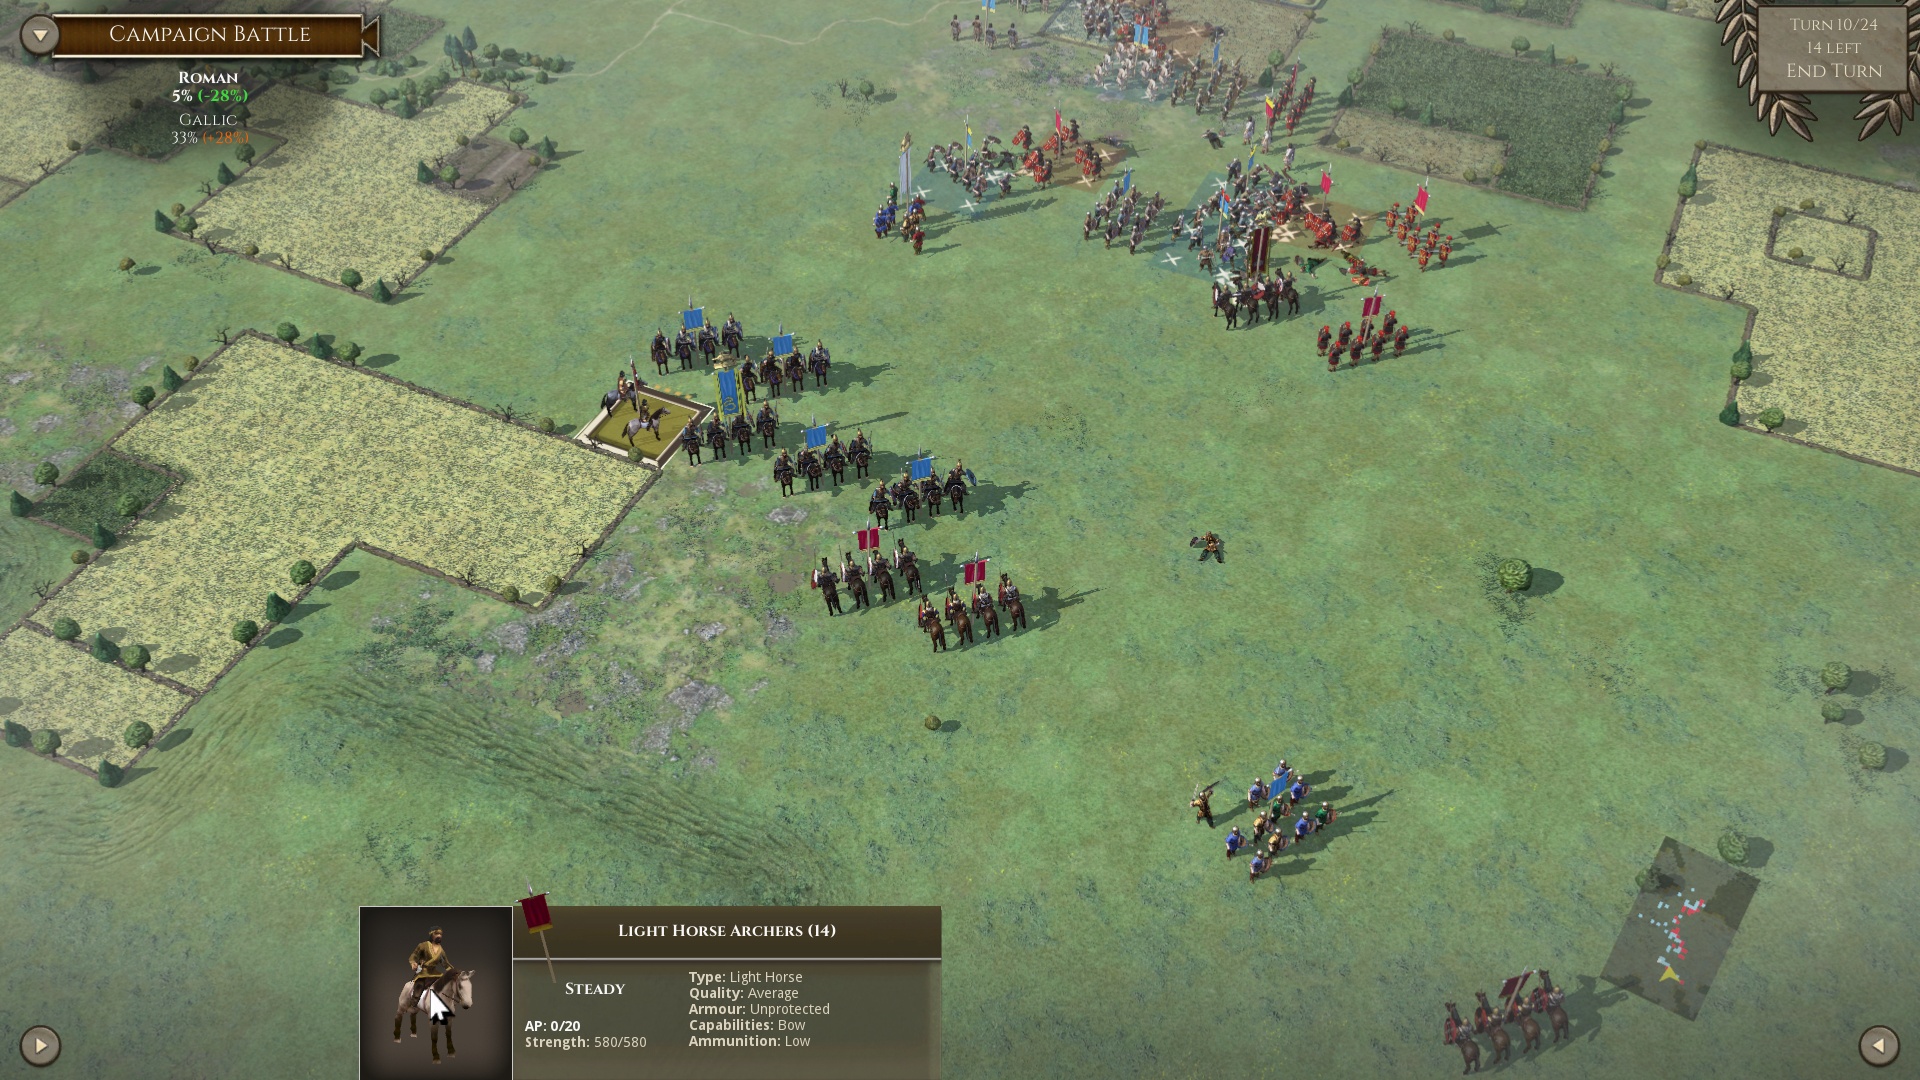 idle gallic cavalry on my left